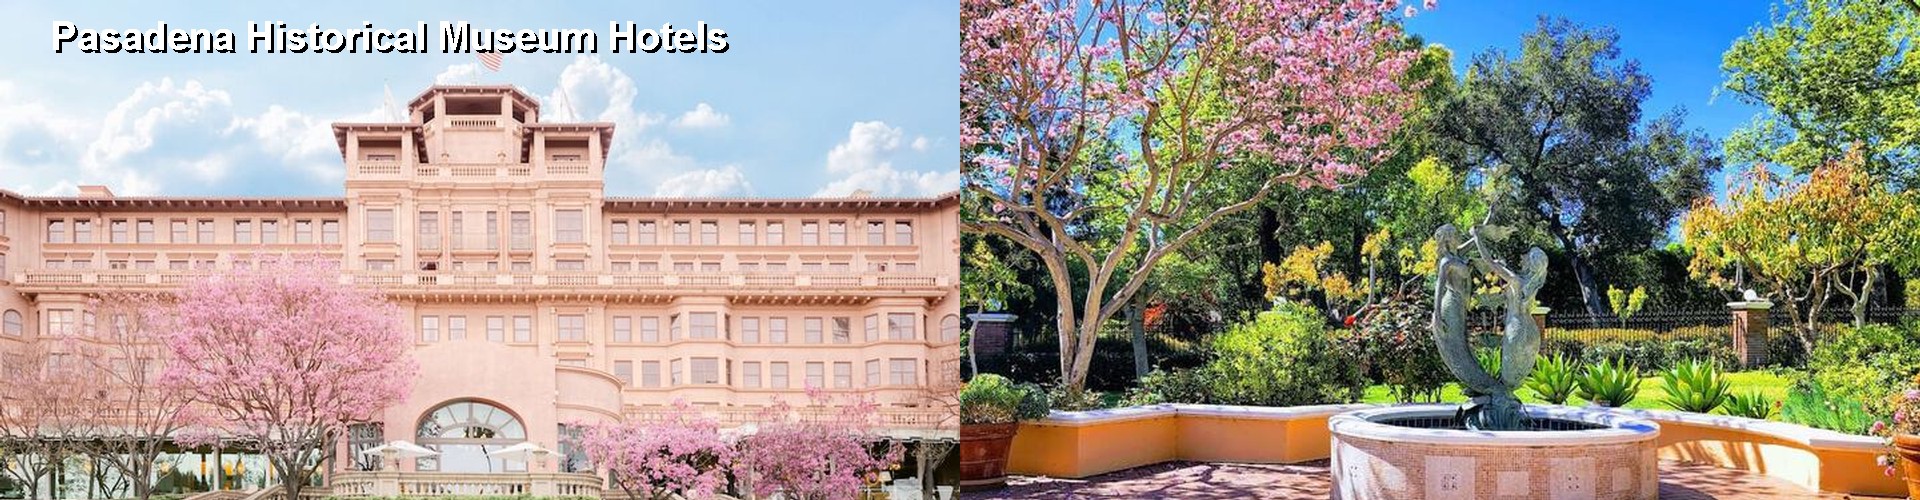 5 Best Hotels near Pasadena Historical Museum